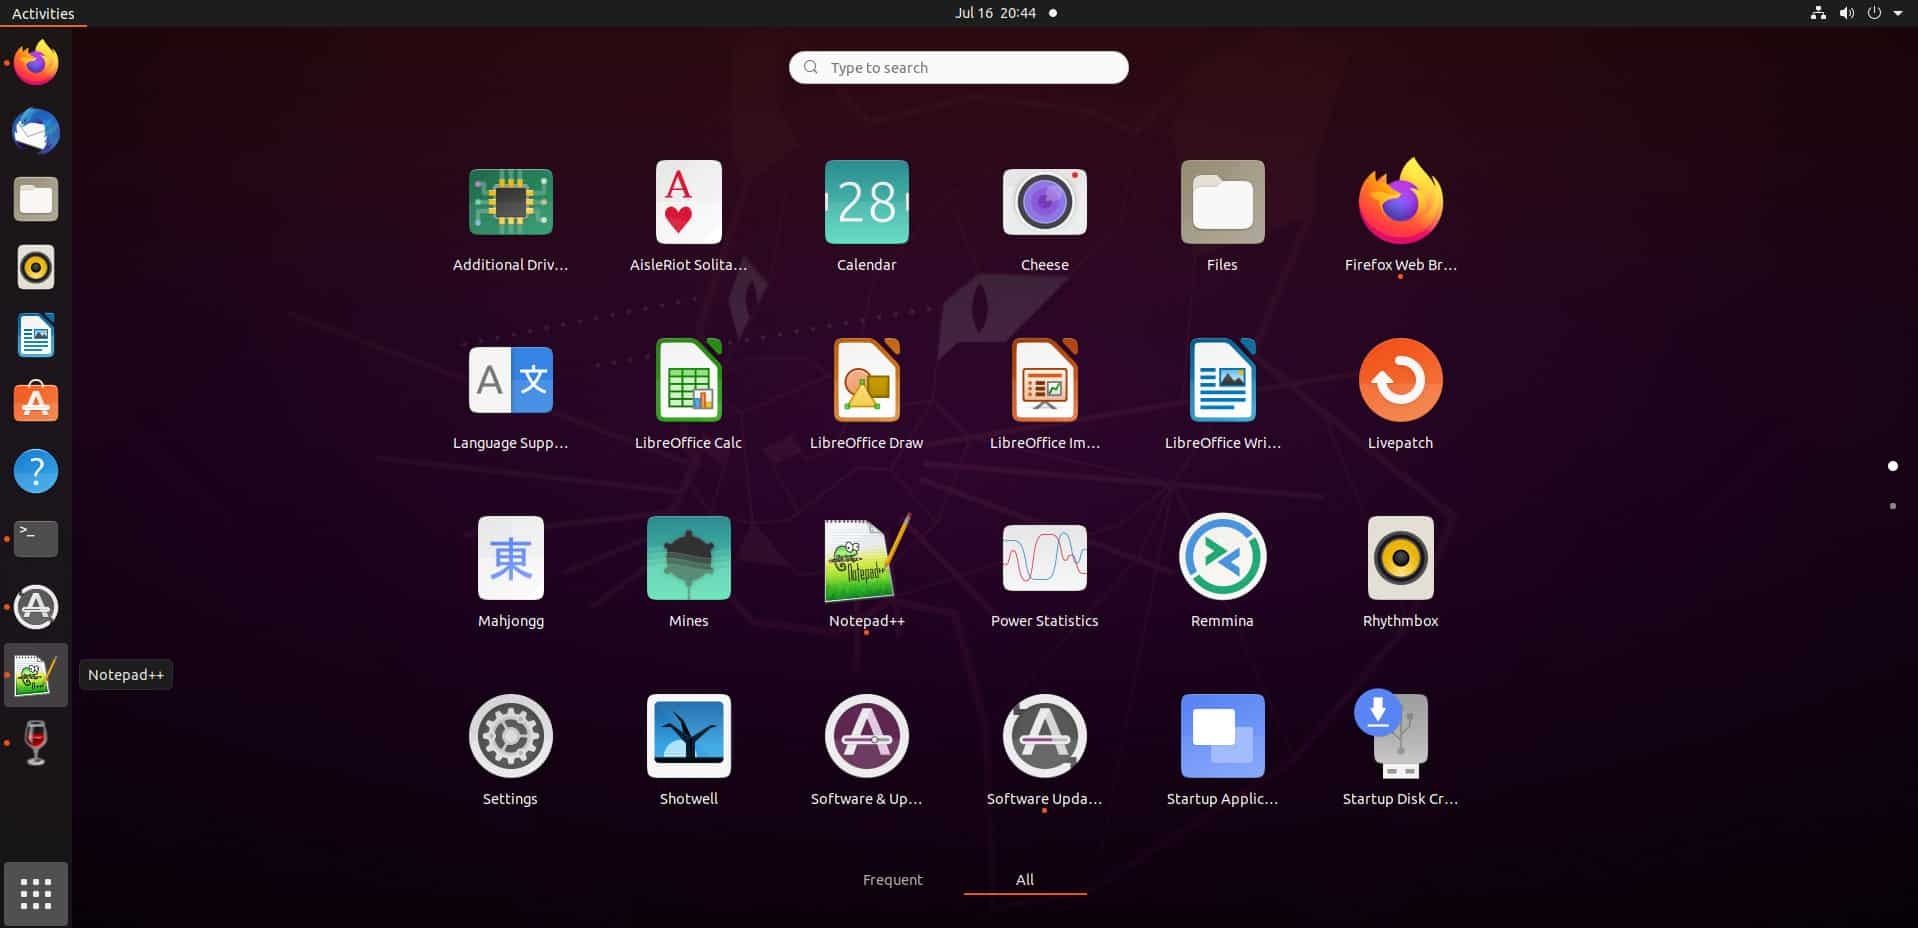 Run The App From The Ubuntu Apps